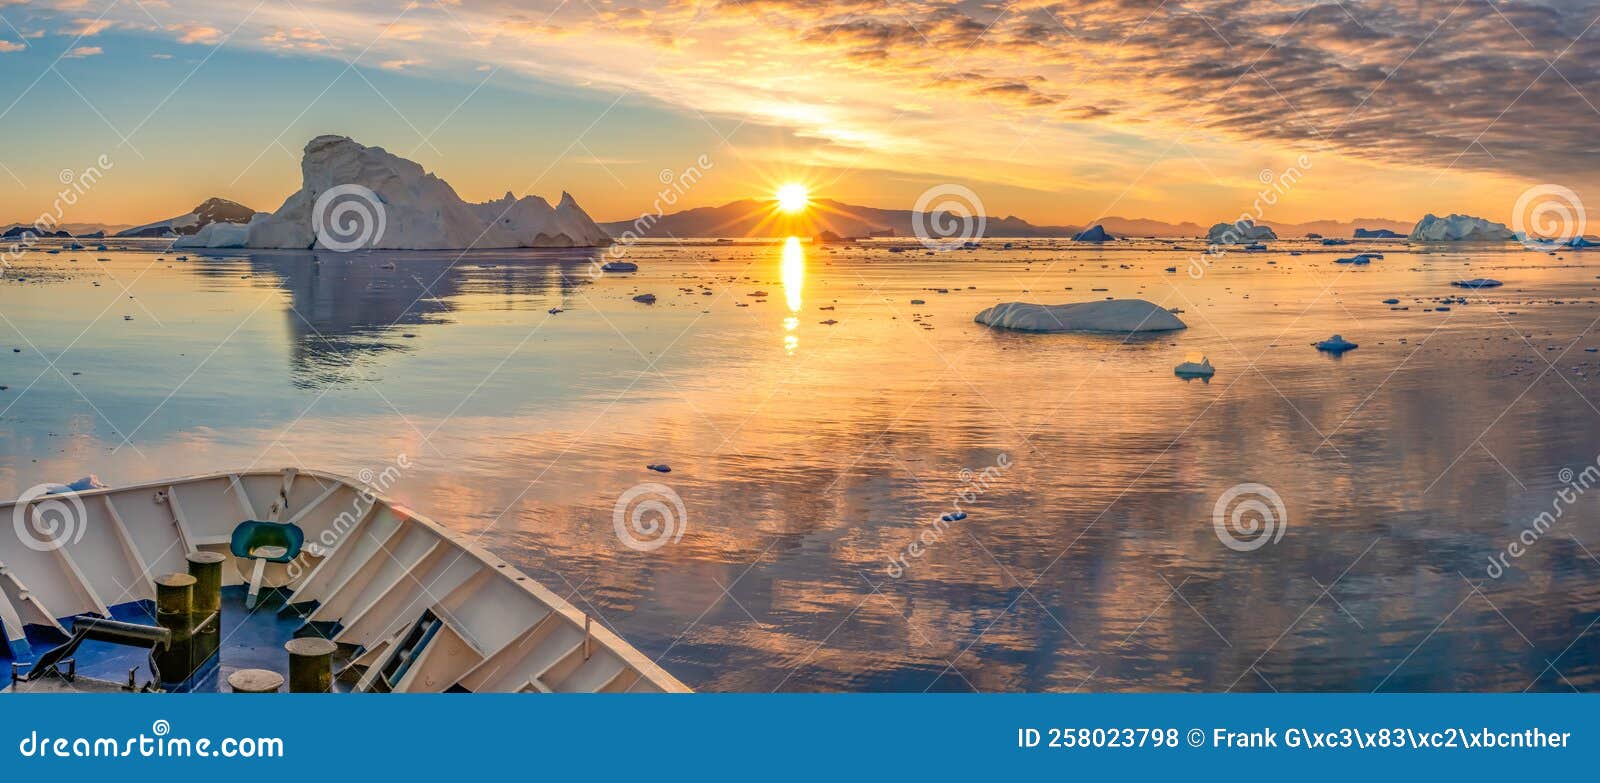 cruise ship sails through wintry cierva cove - antarctica, during a dramatic sunset evening sunset.